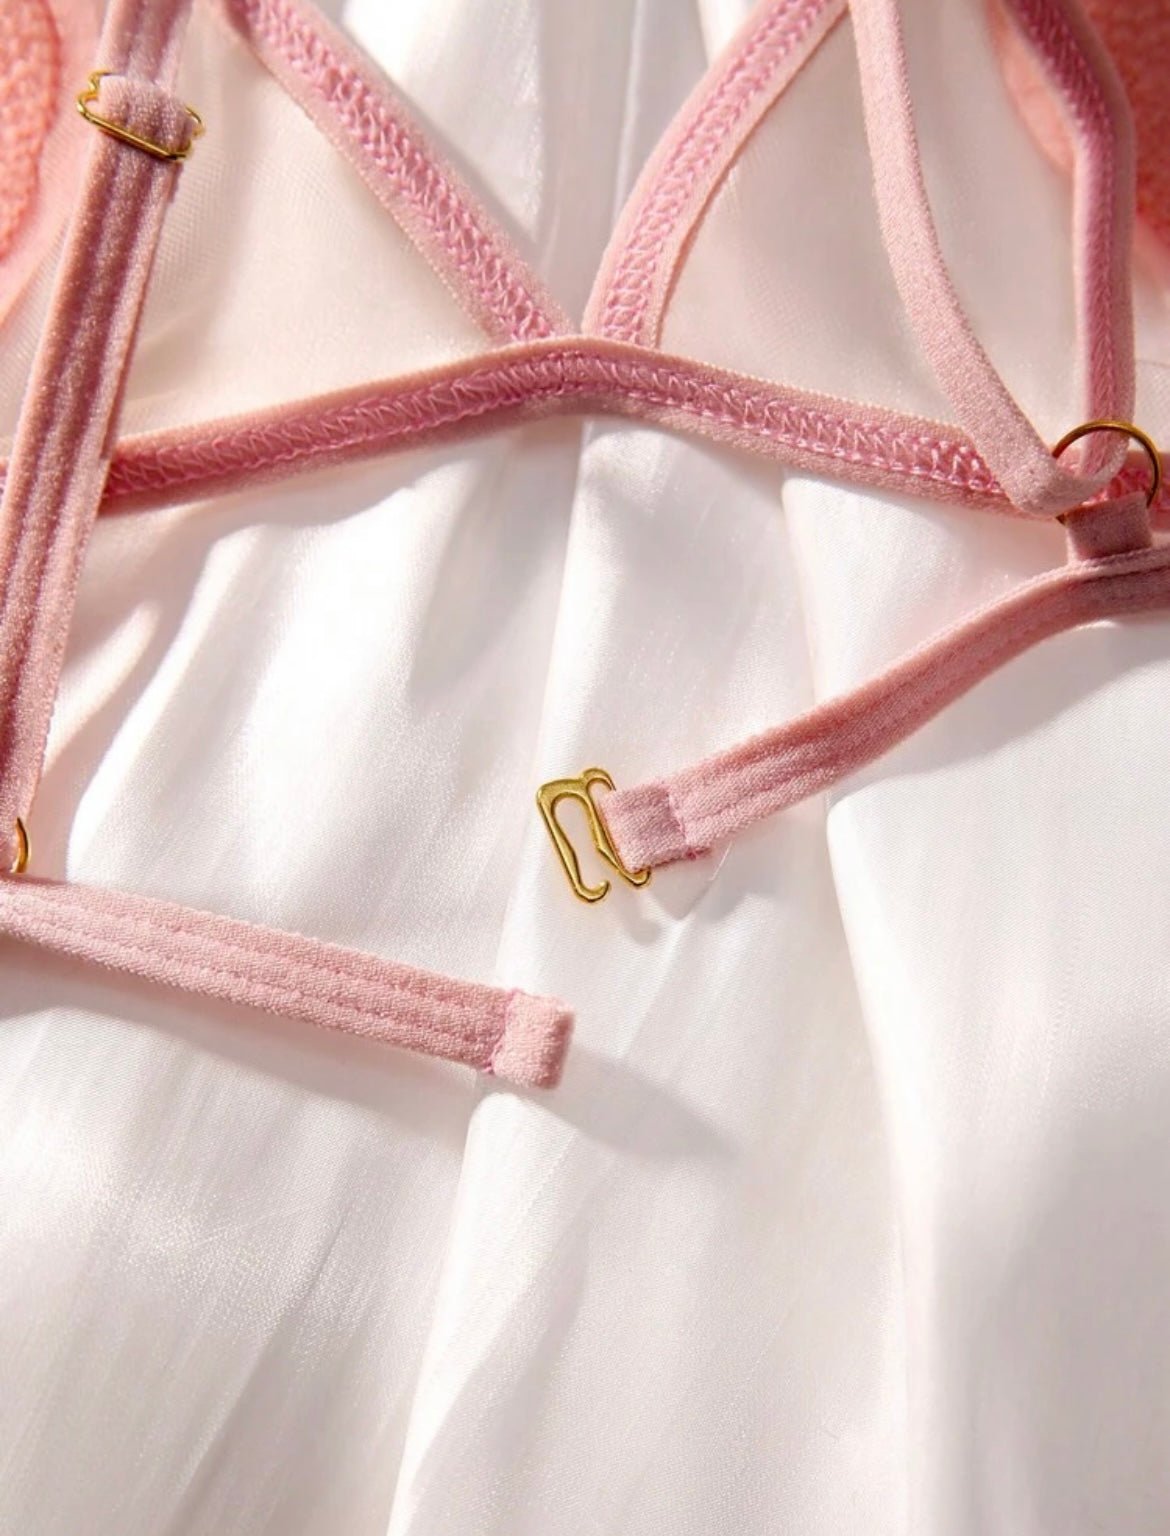 Pink Lingerie Set Heart Embroidered - Self Care Shop